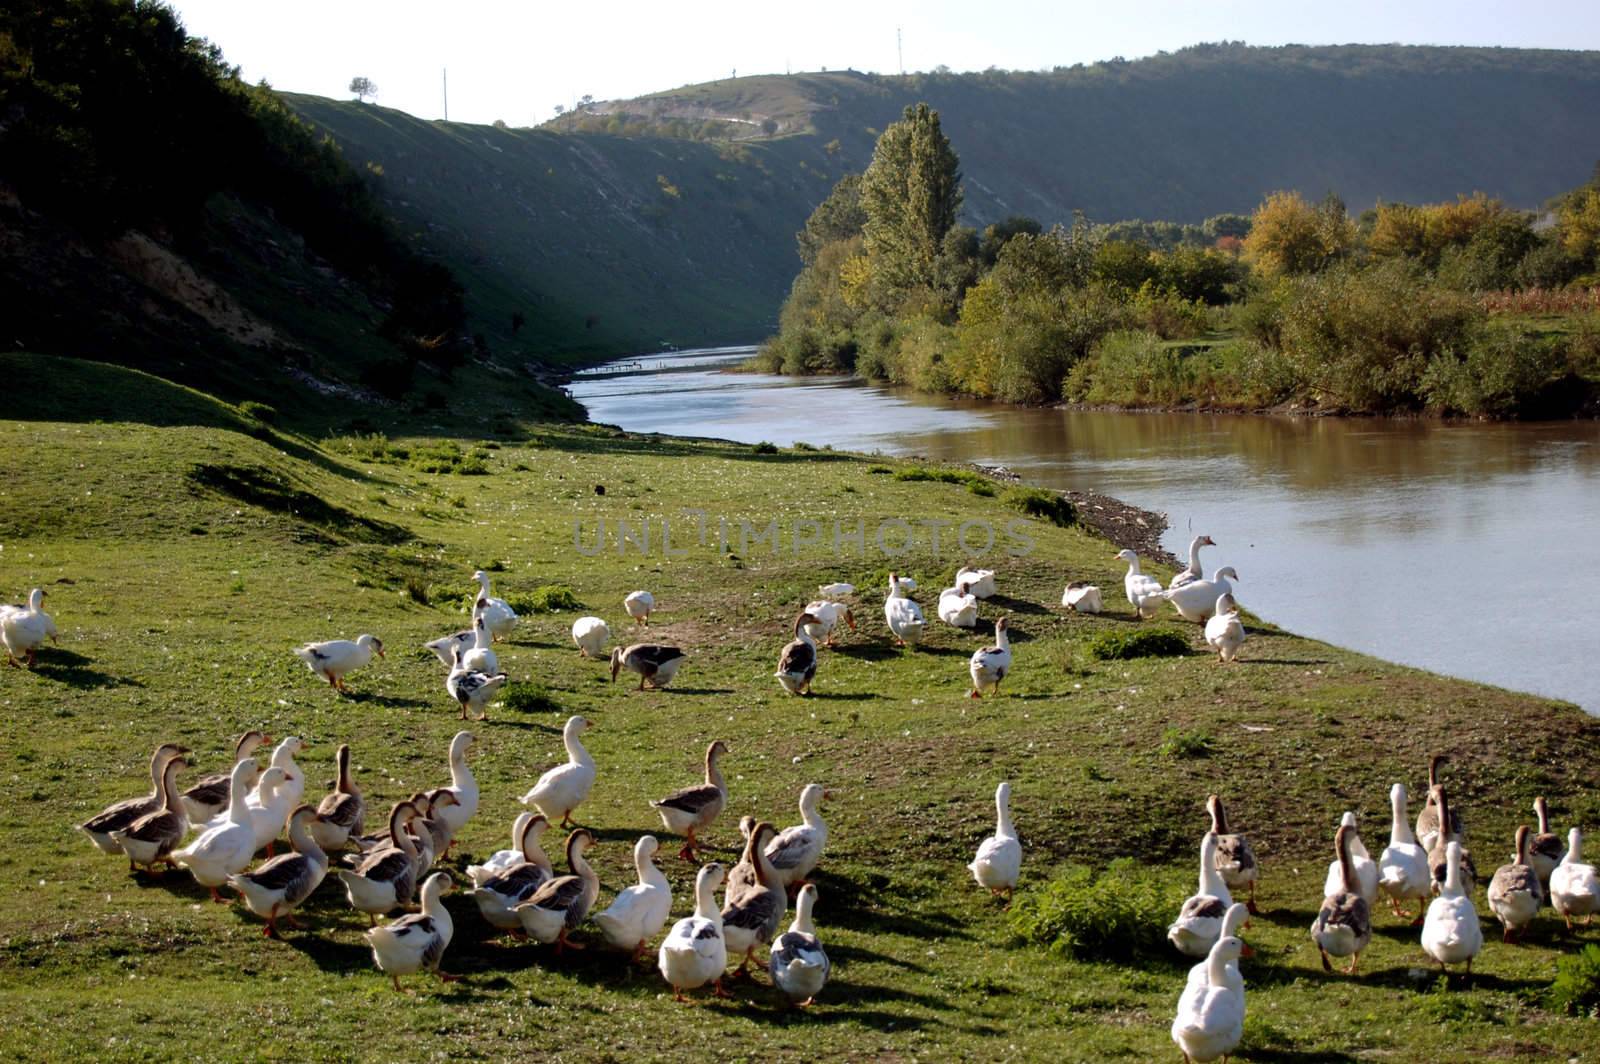 landscape of hills, river and ducks